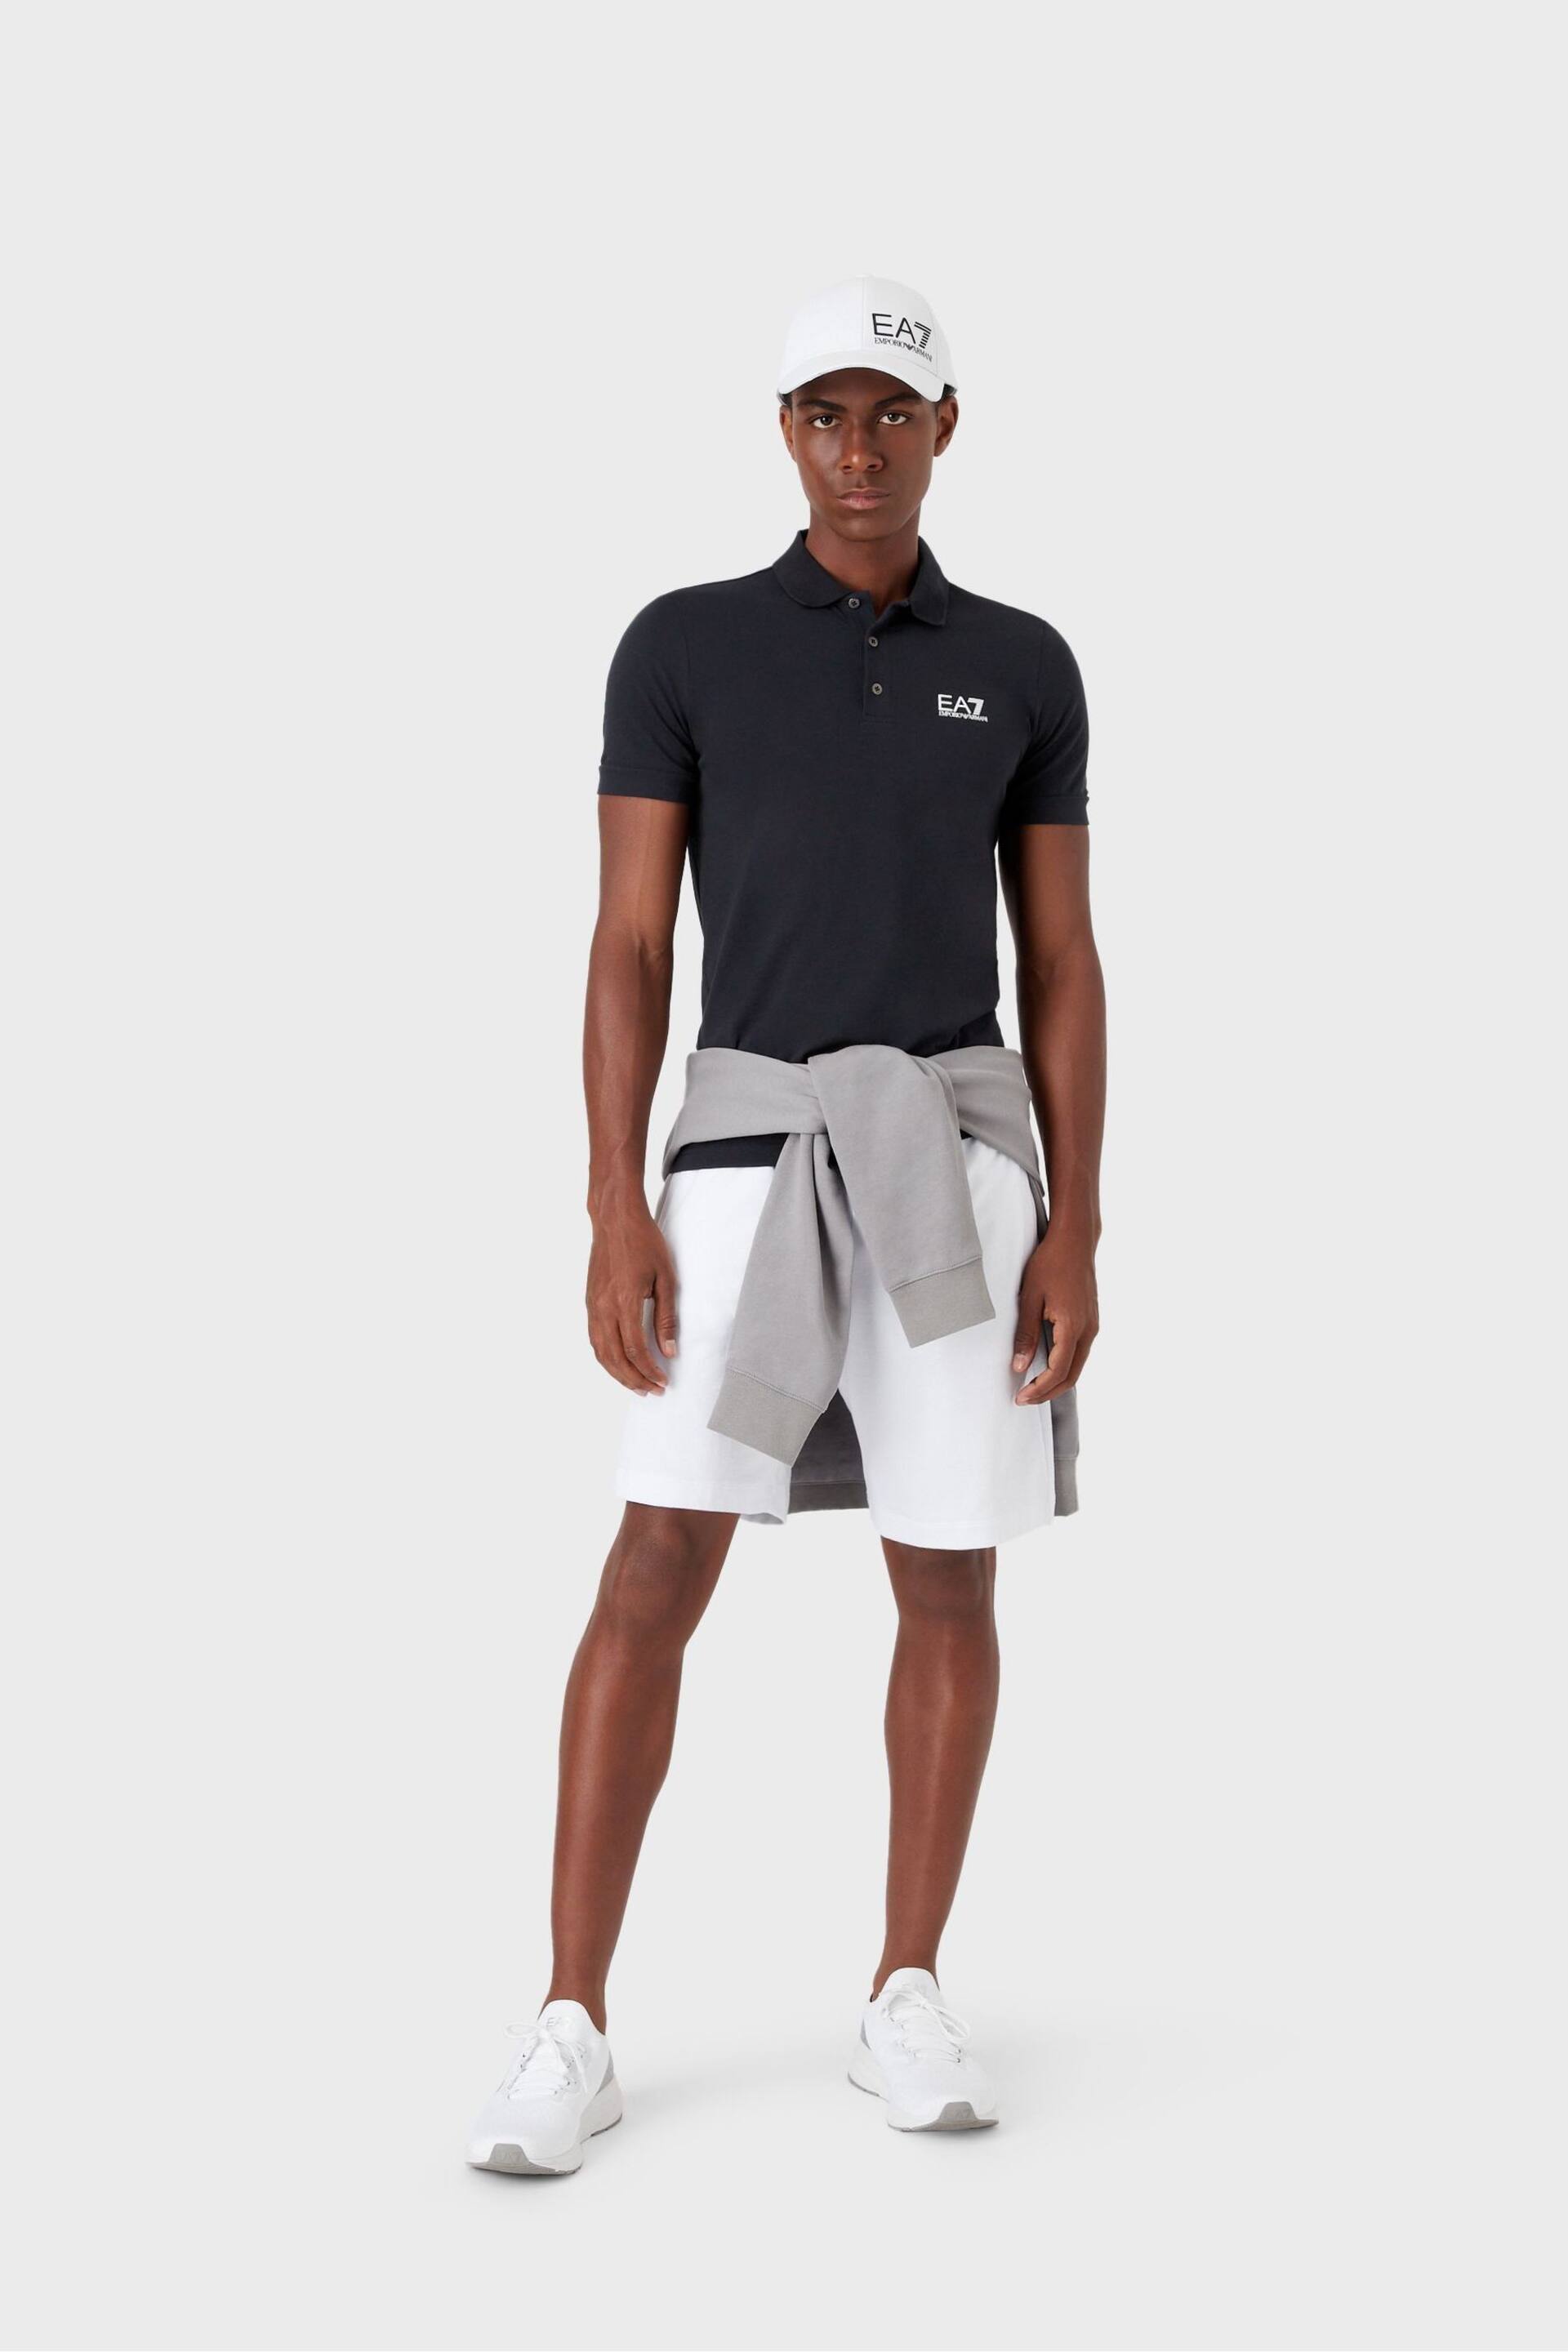 Emporio Armani EA7 Core ID Stretch Cotton Polo Shirt - Image 2 of 6